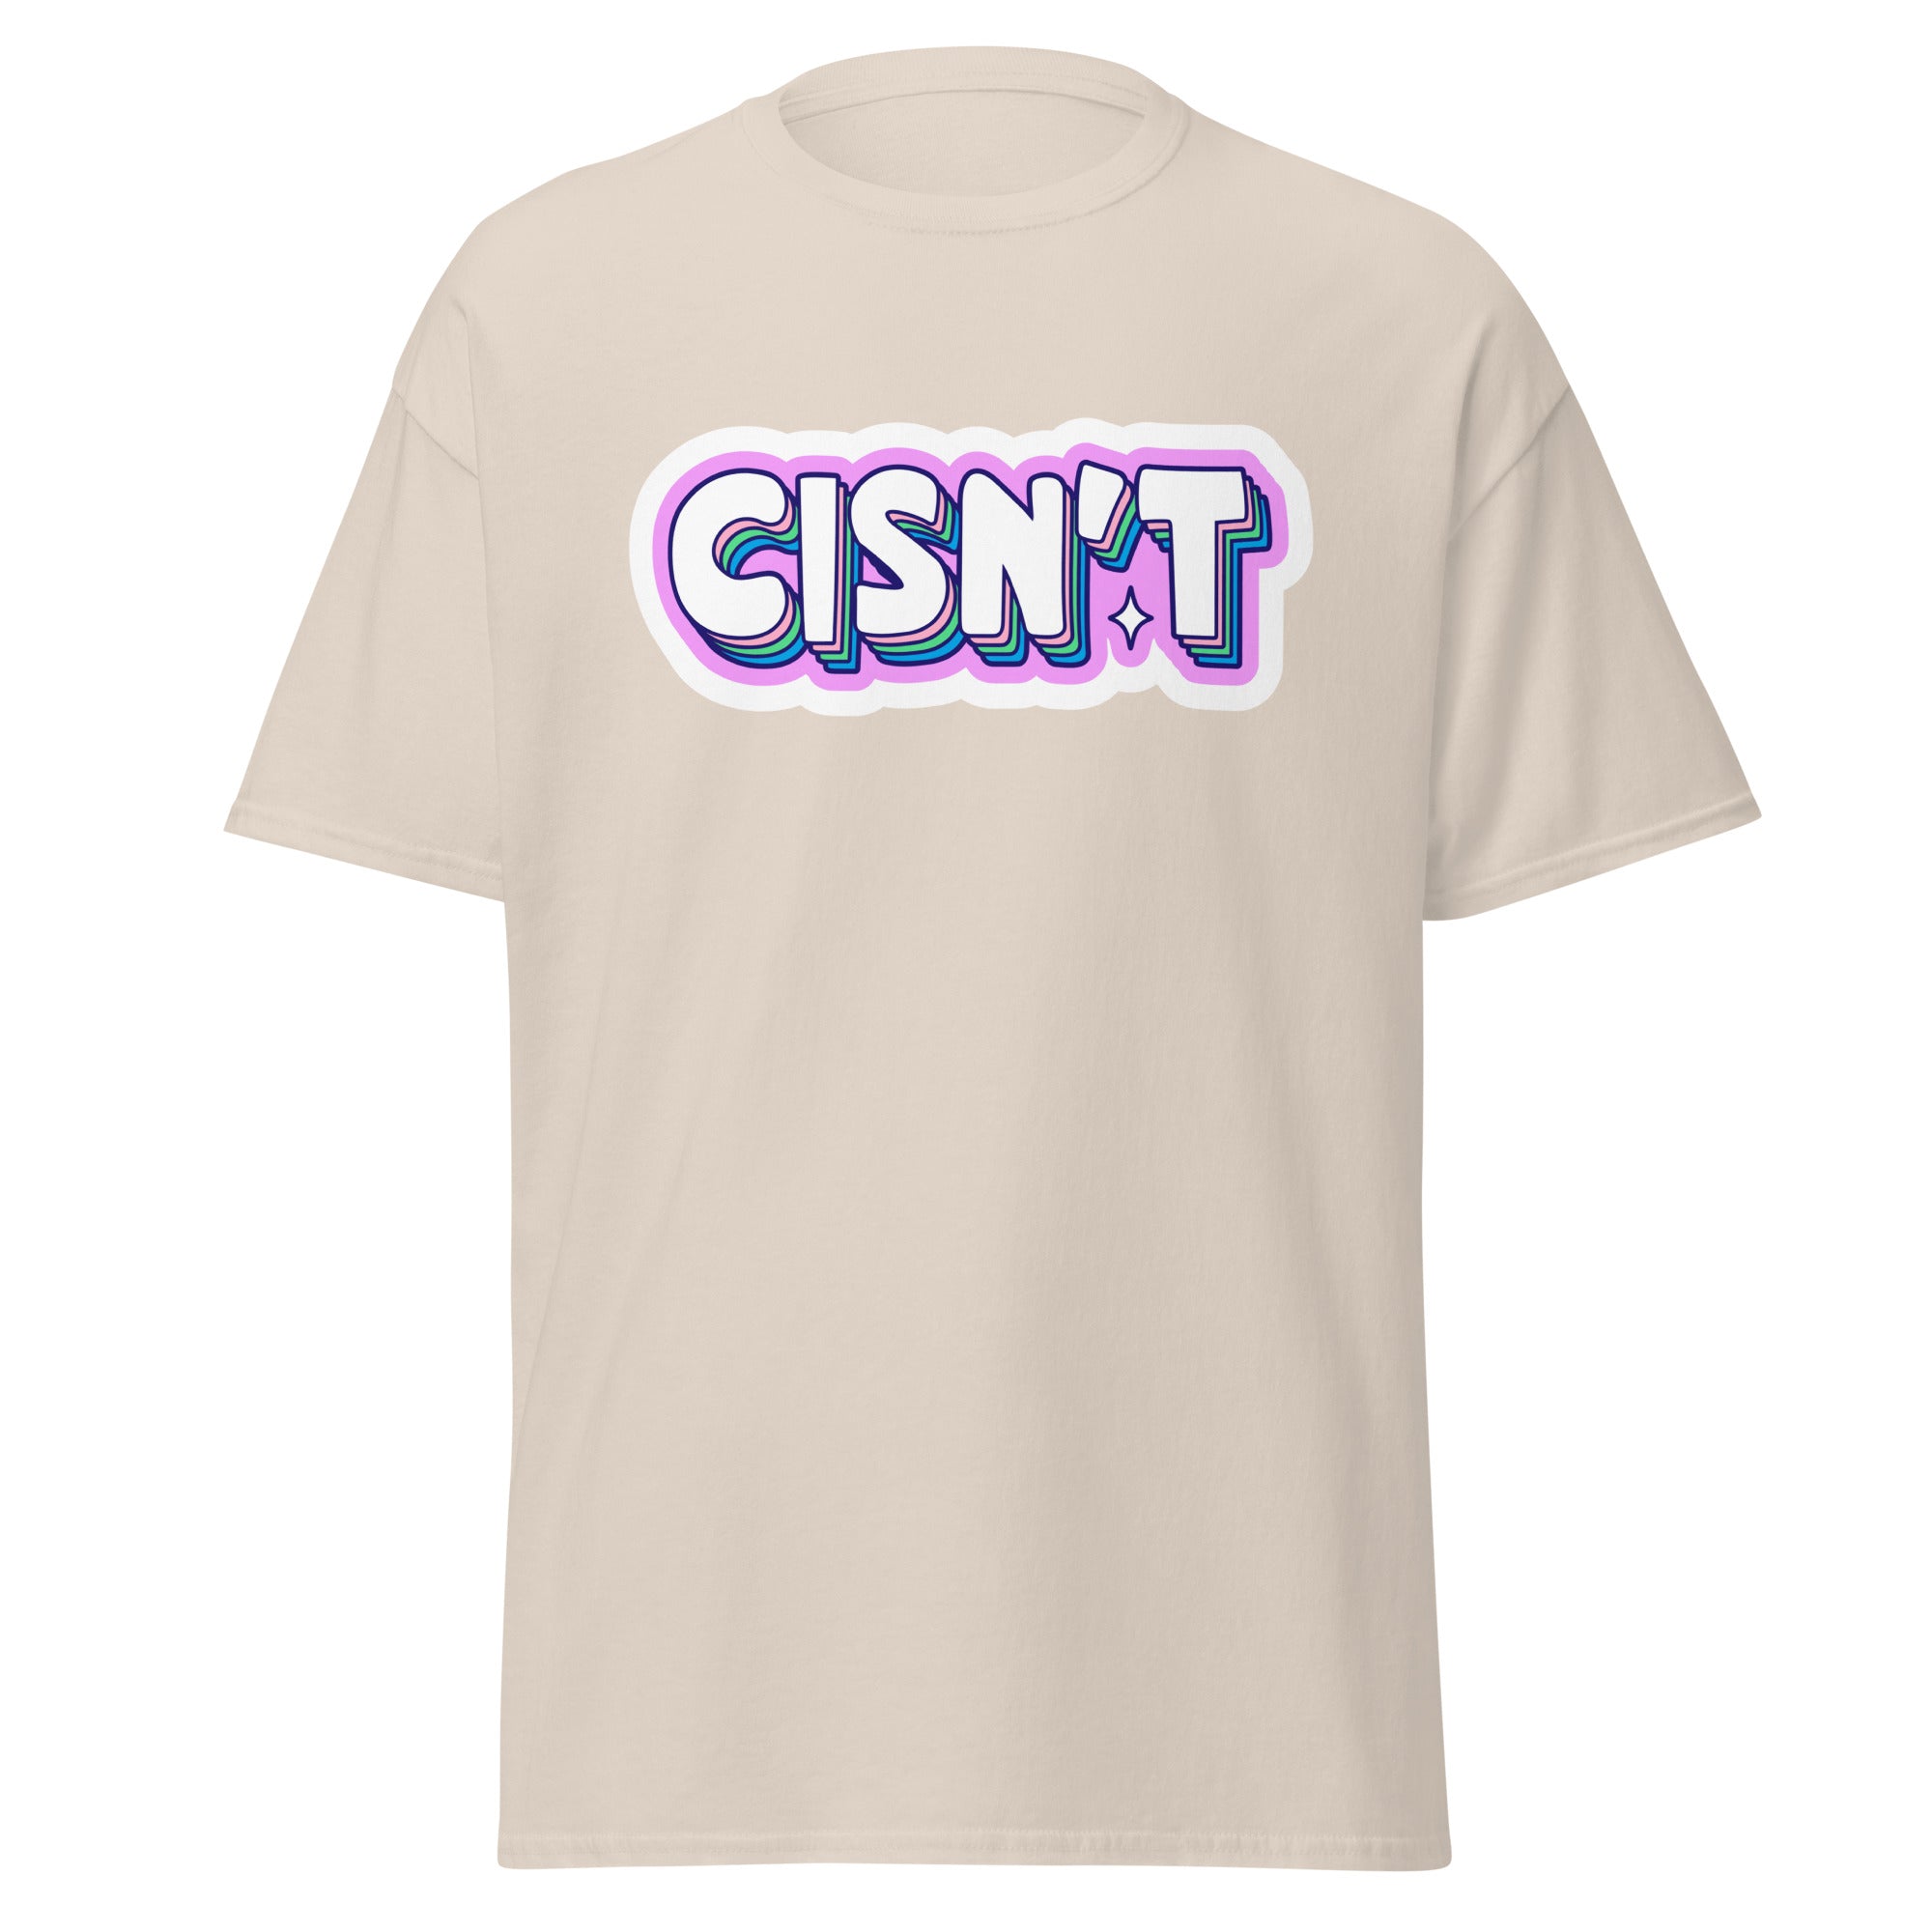 CISN'T Unisex T Shirt